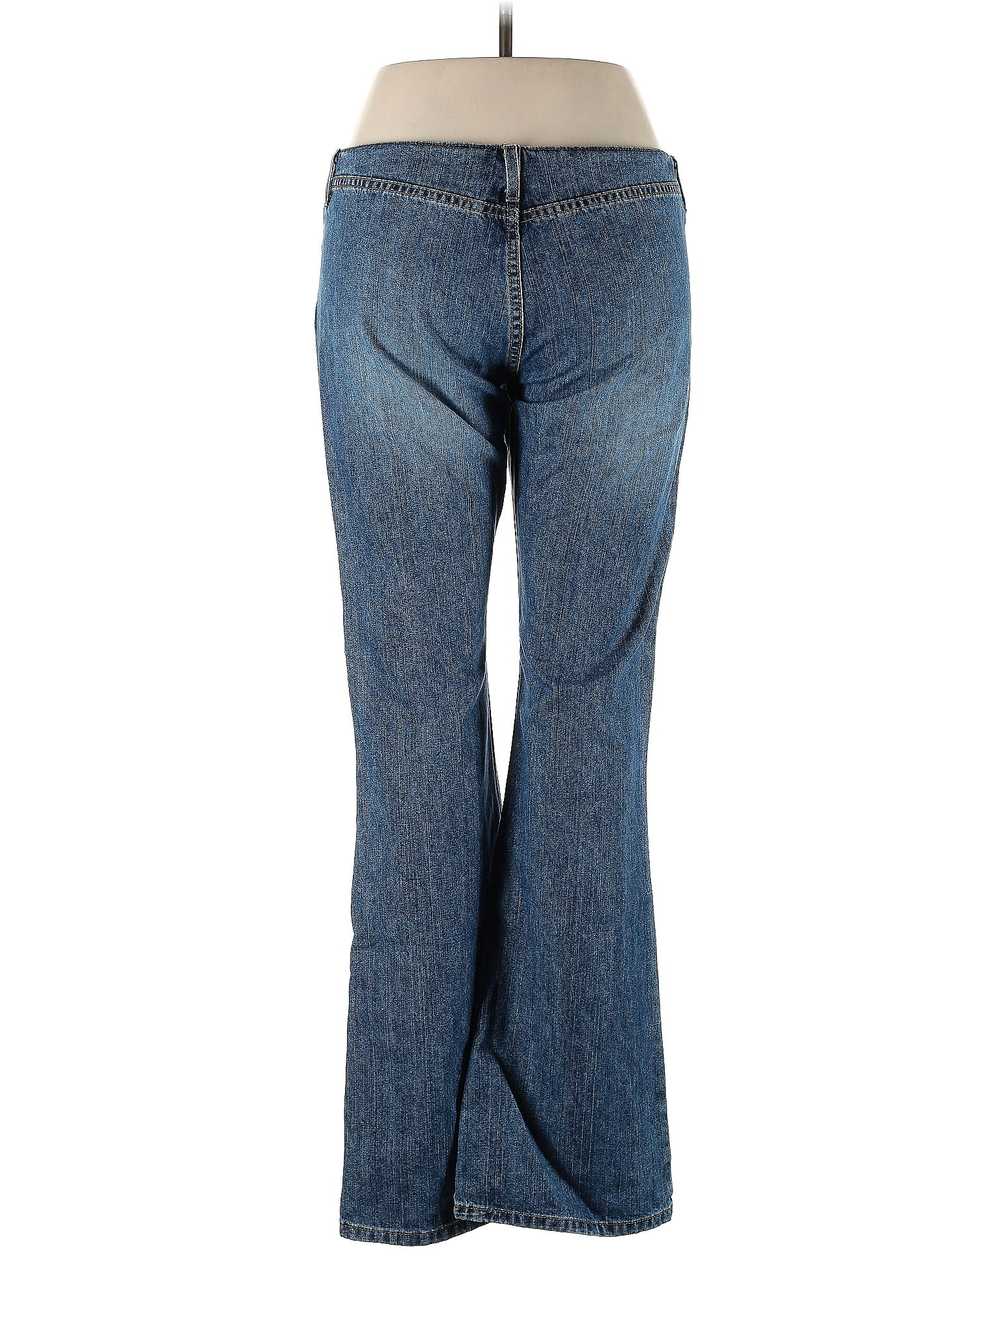 Juicy Jean Couture Women Blue Jeans 31W - image 2